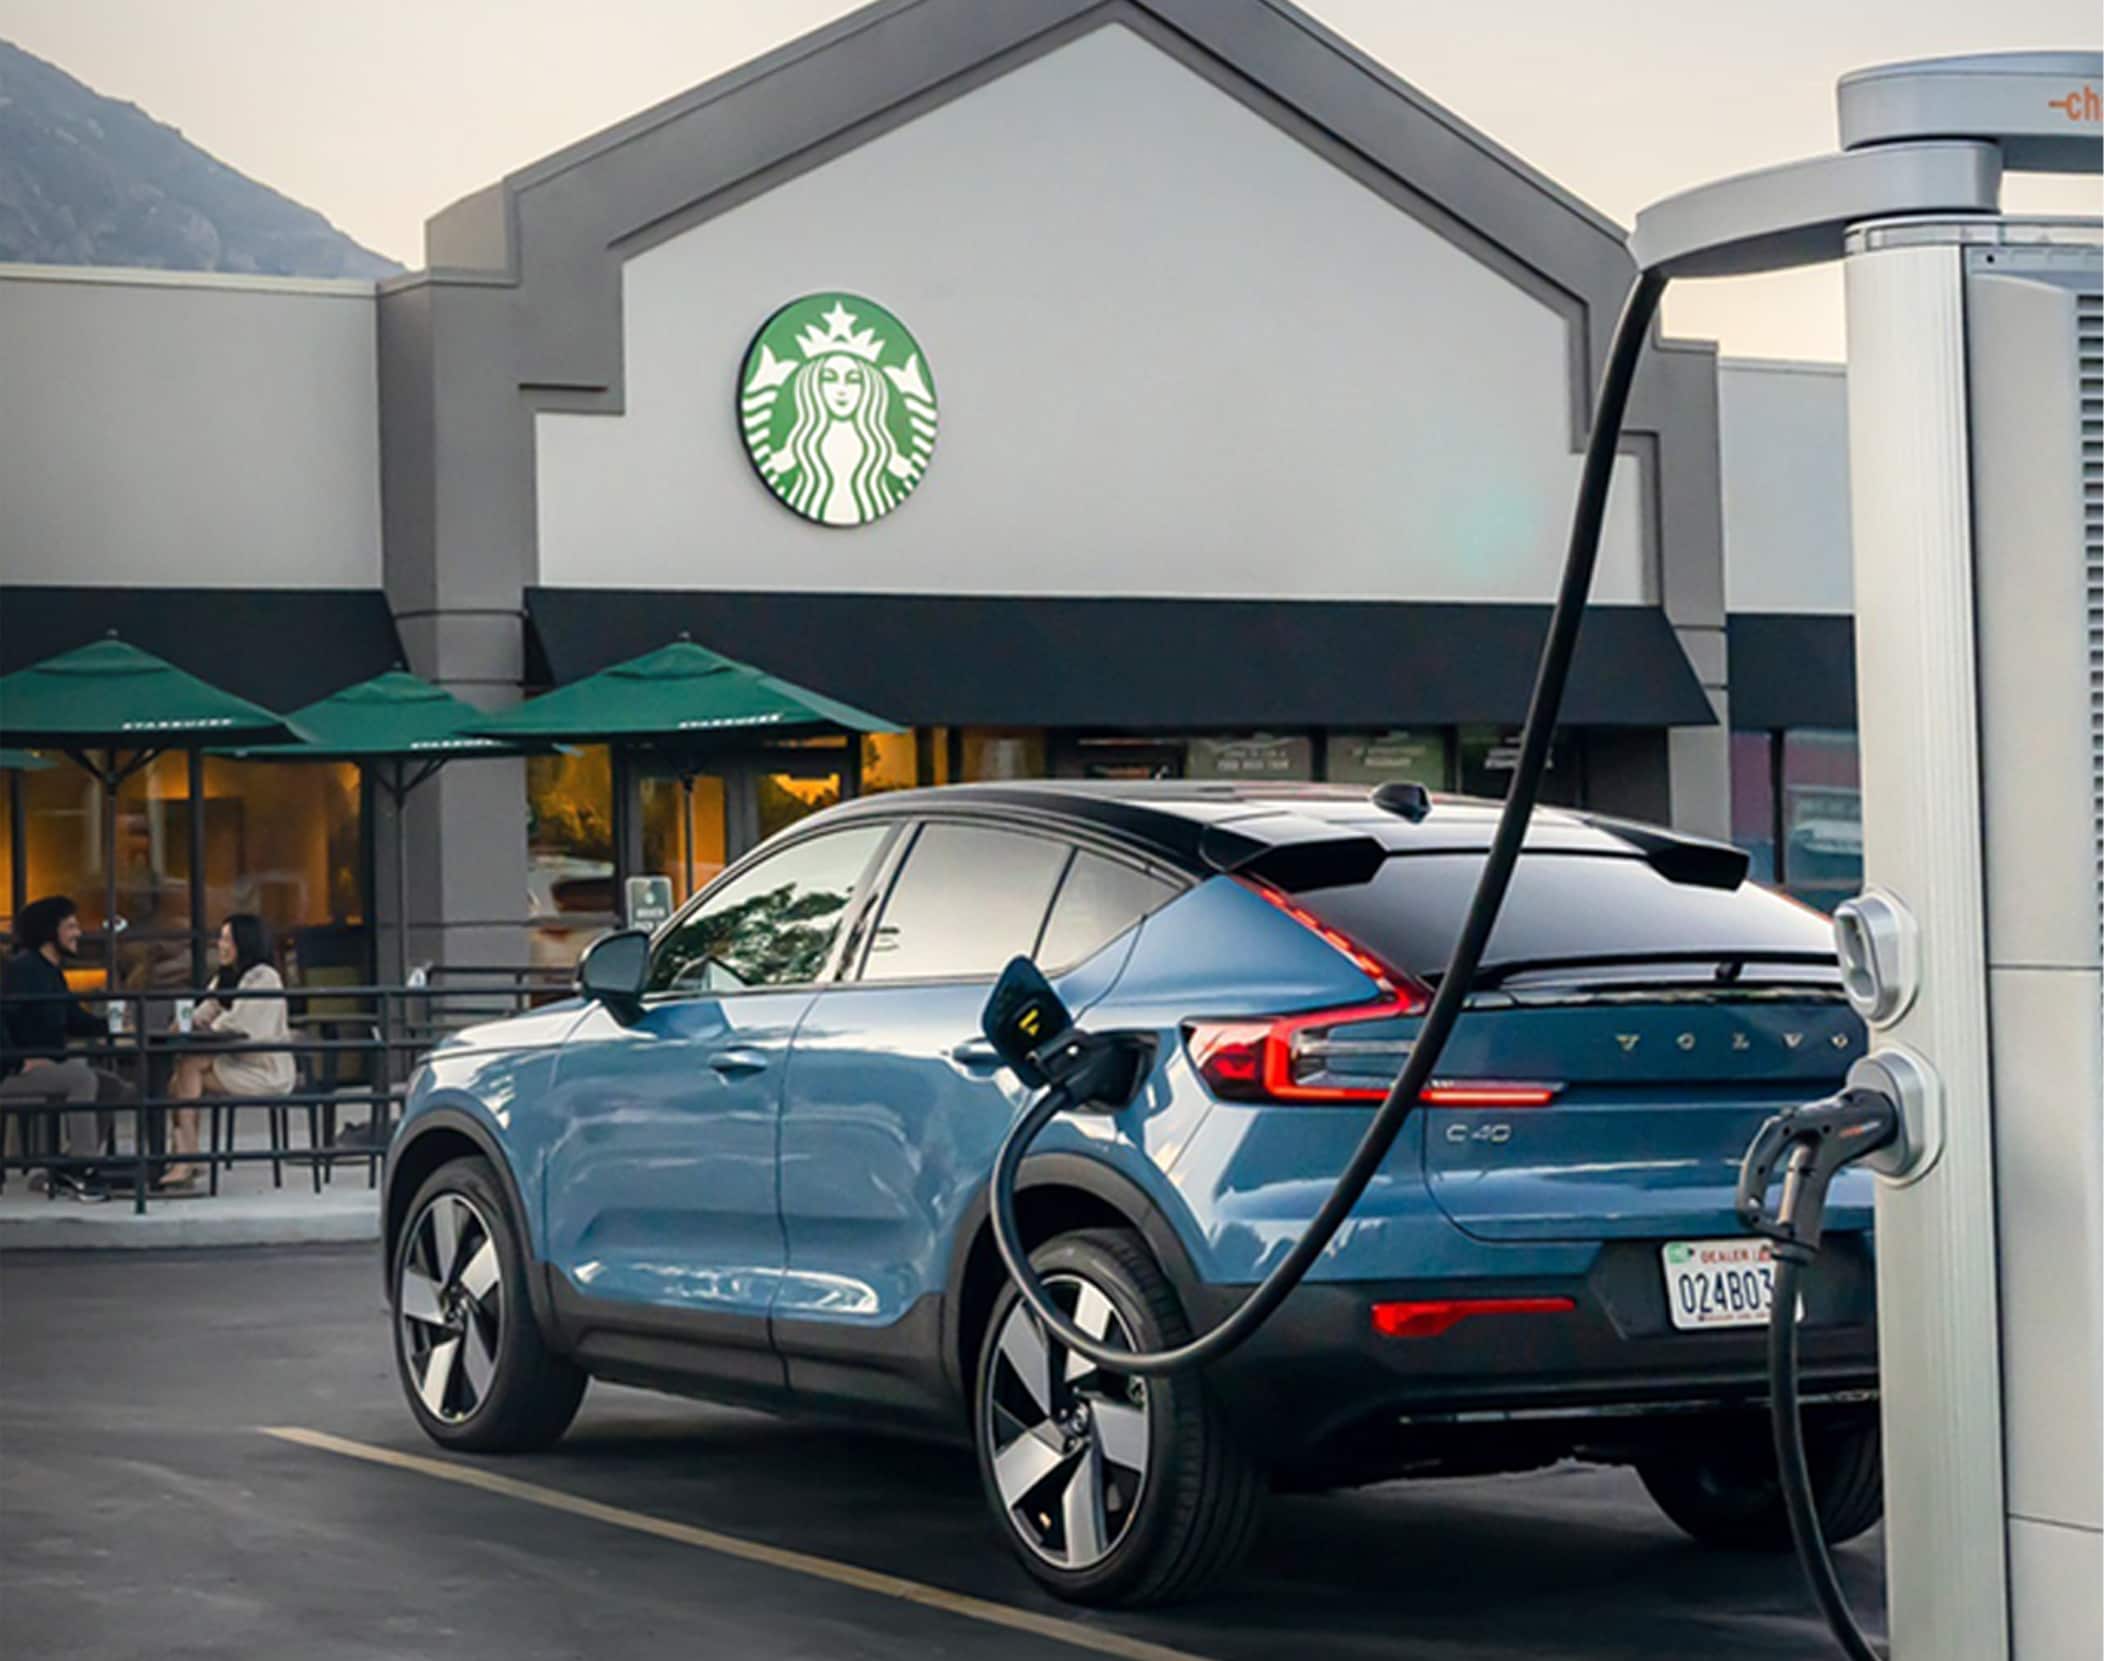 Starbucks Volvo EV Charging Stations - Electric vehicle charging outside of Starbucks